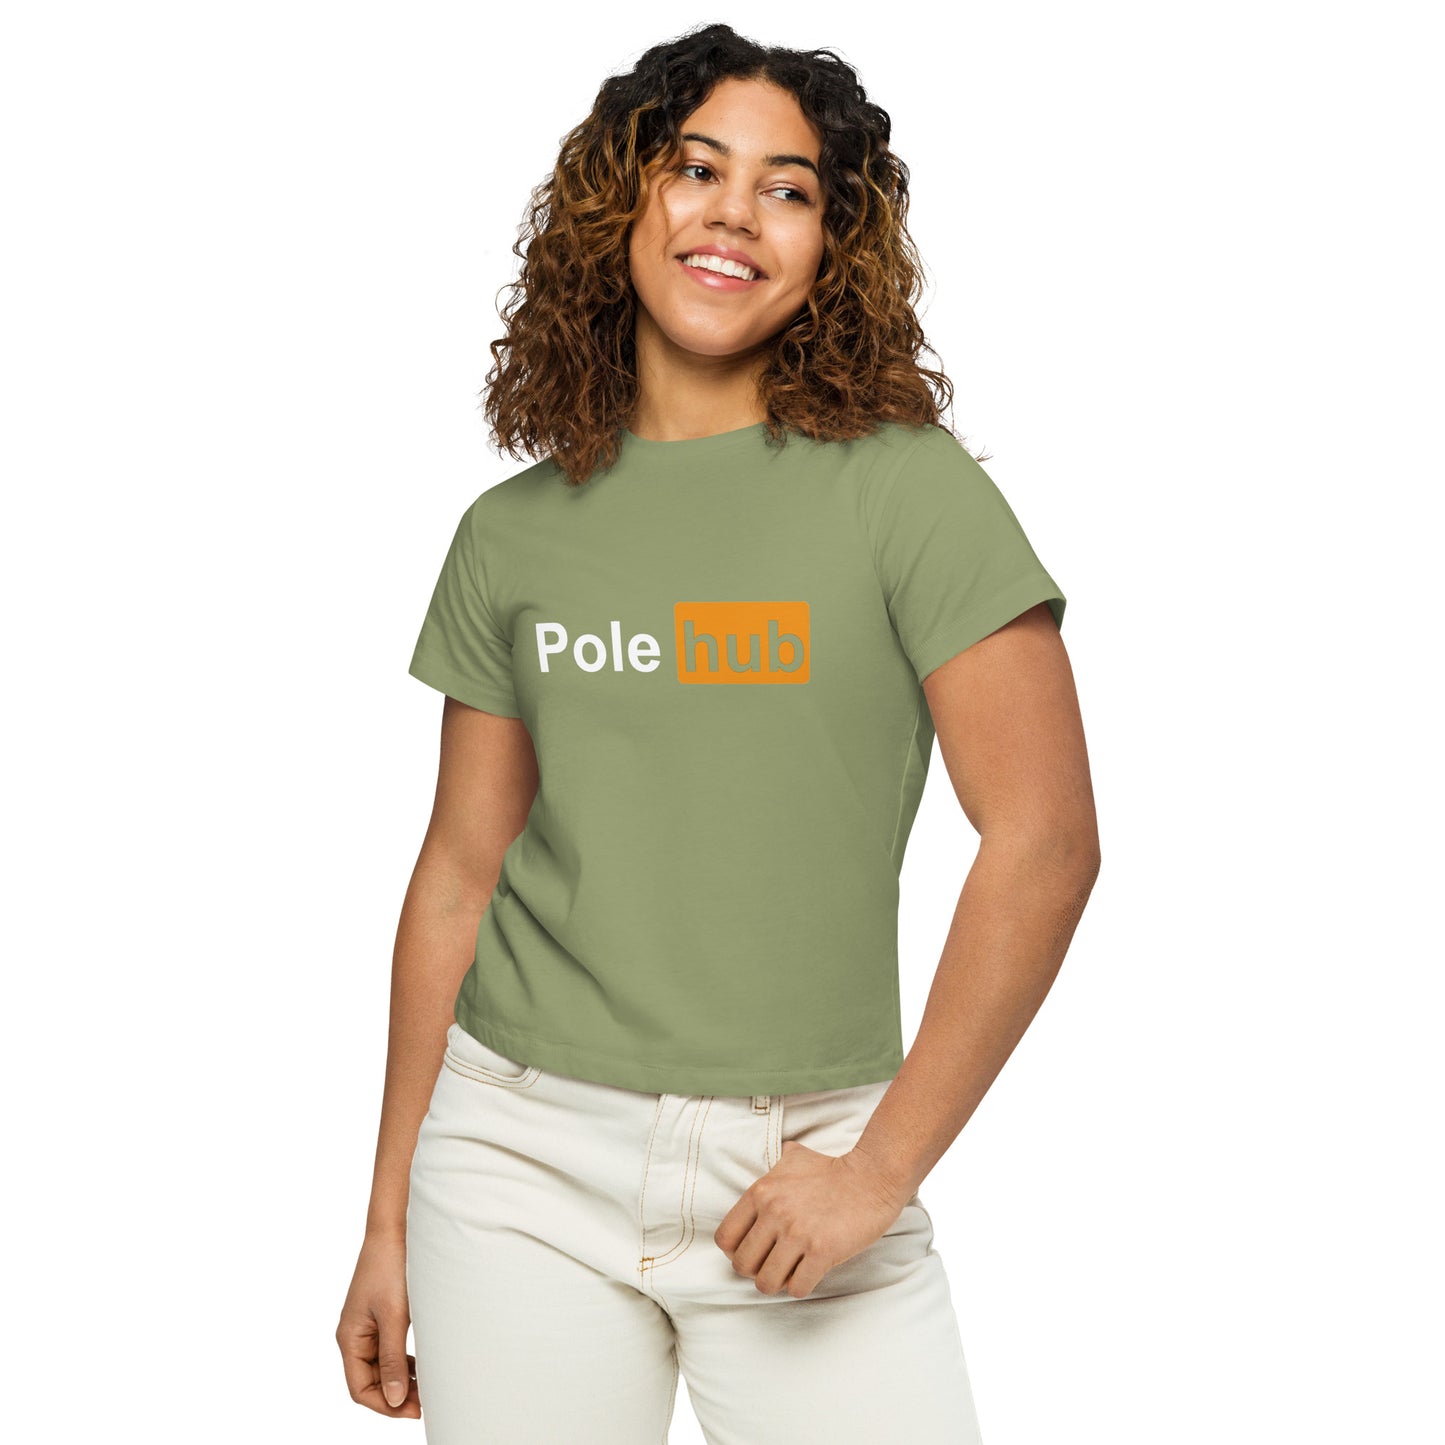 Pole Hub - Women’s high-waisted t-shirt